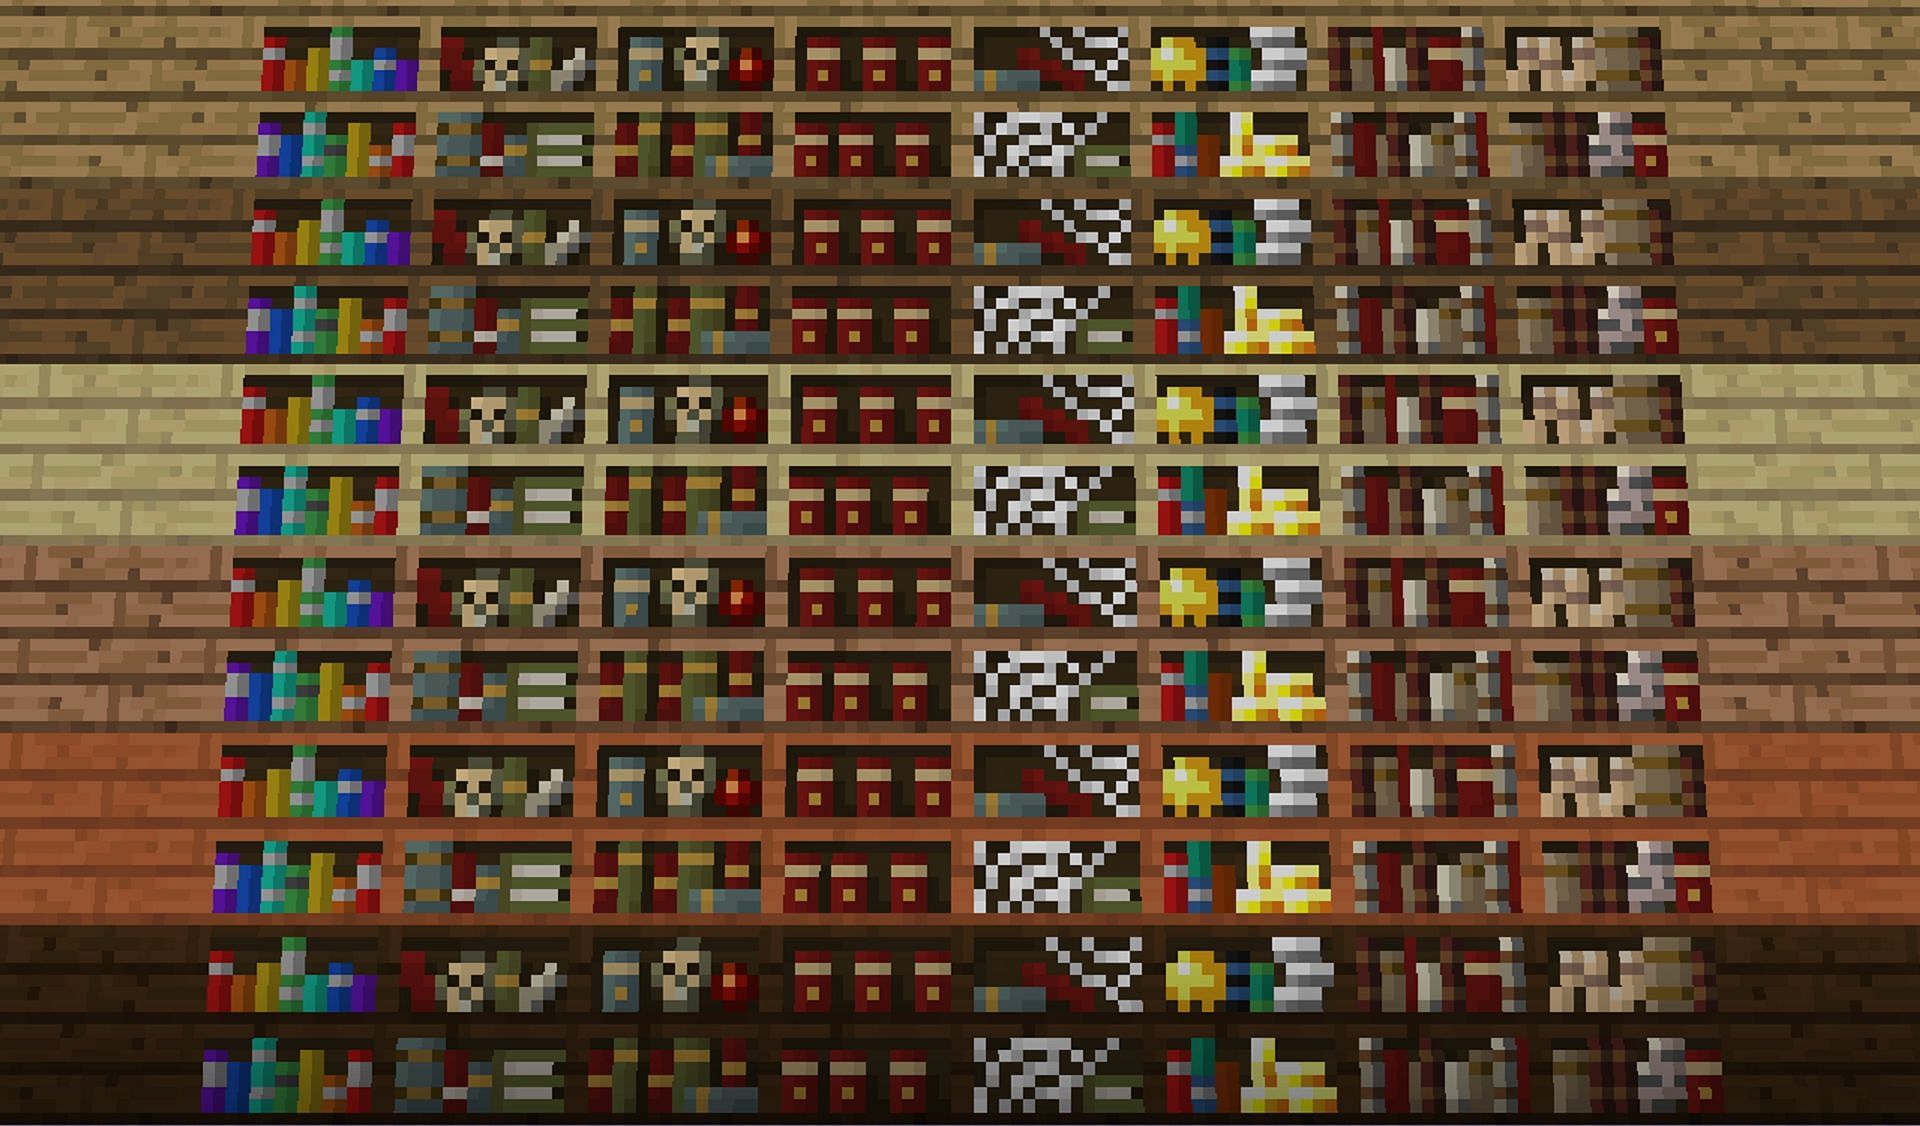 New bookshelves provided by the Chisel mod (Image via tterag1098/CurseForge)